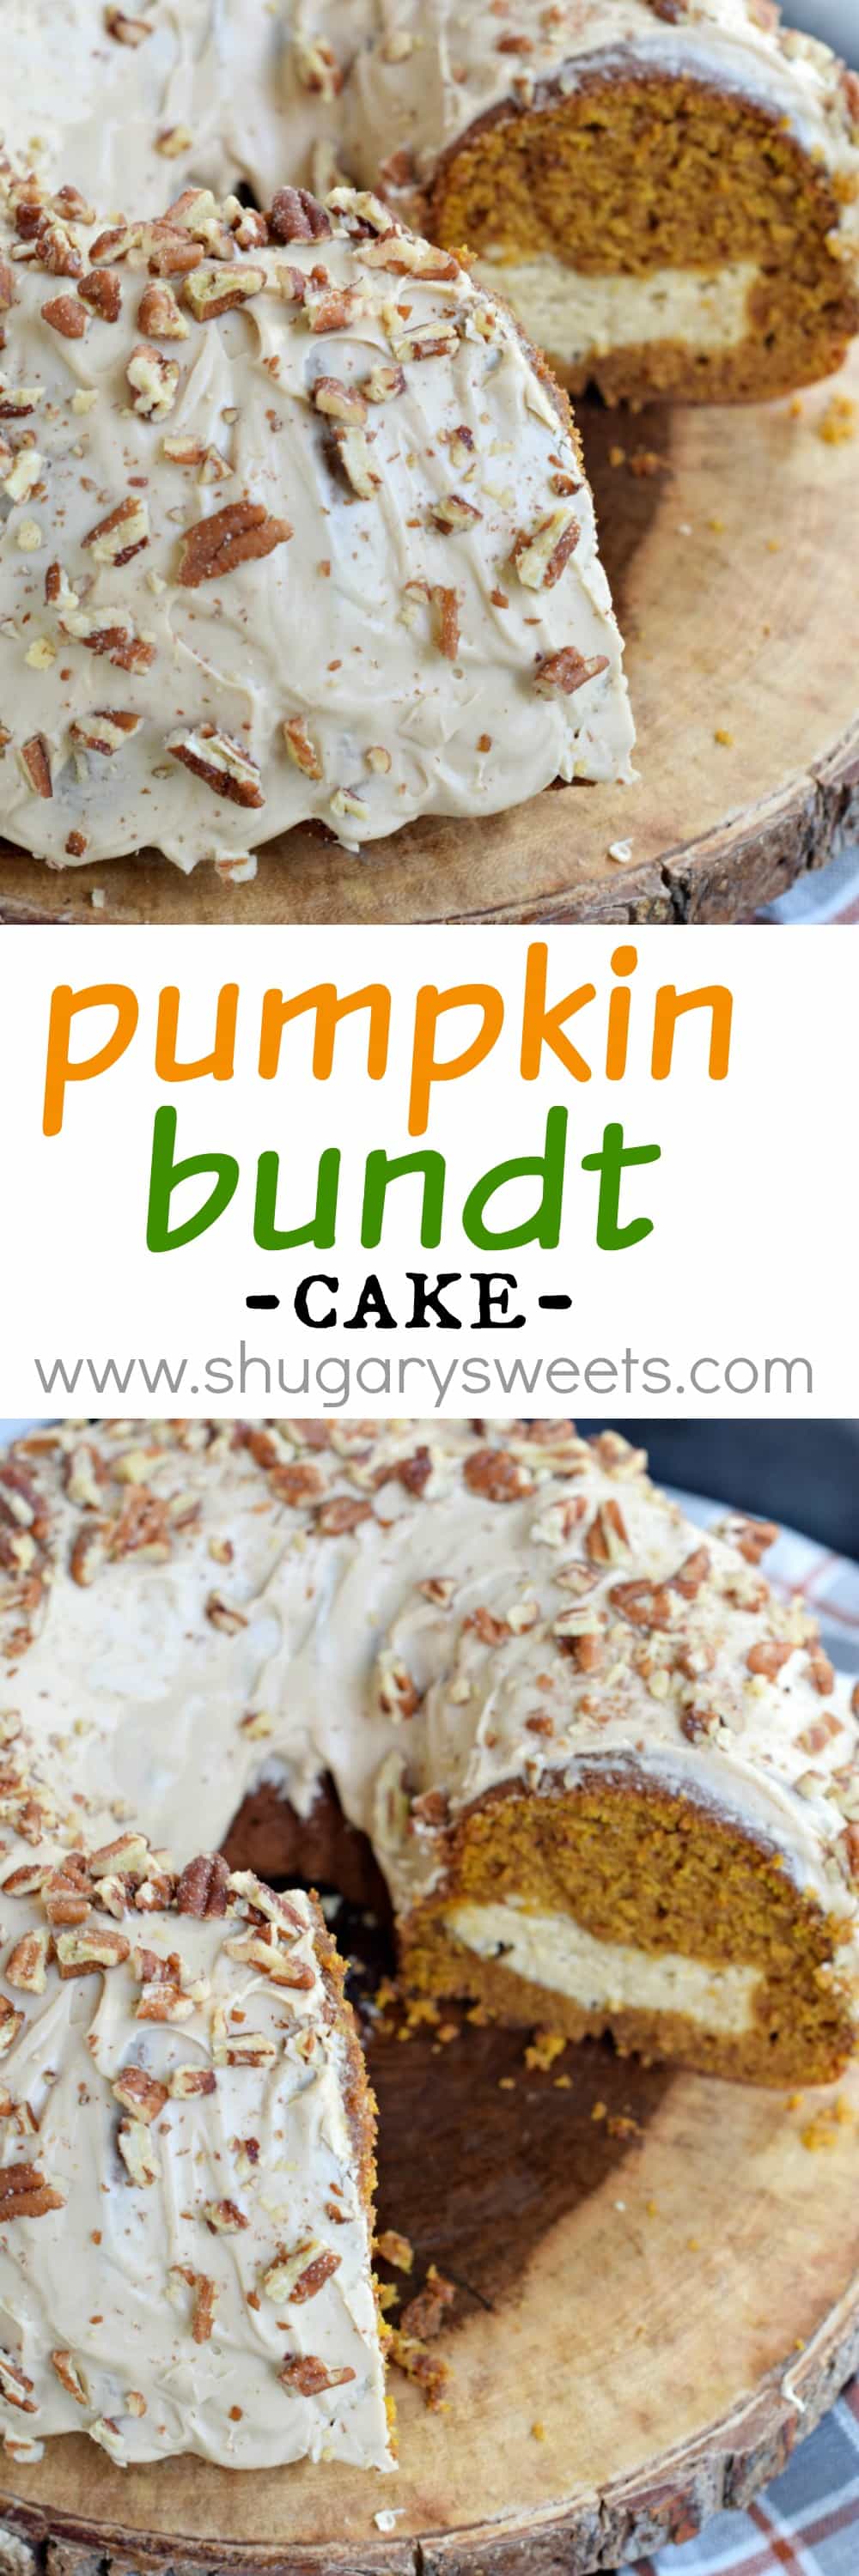 Pumpkin Cream Cheese Bundt Cake - Shugary Sweets